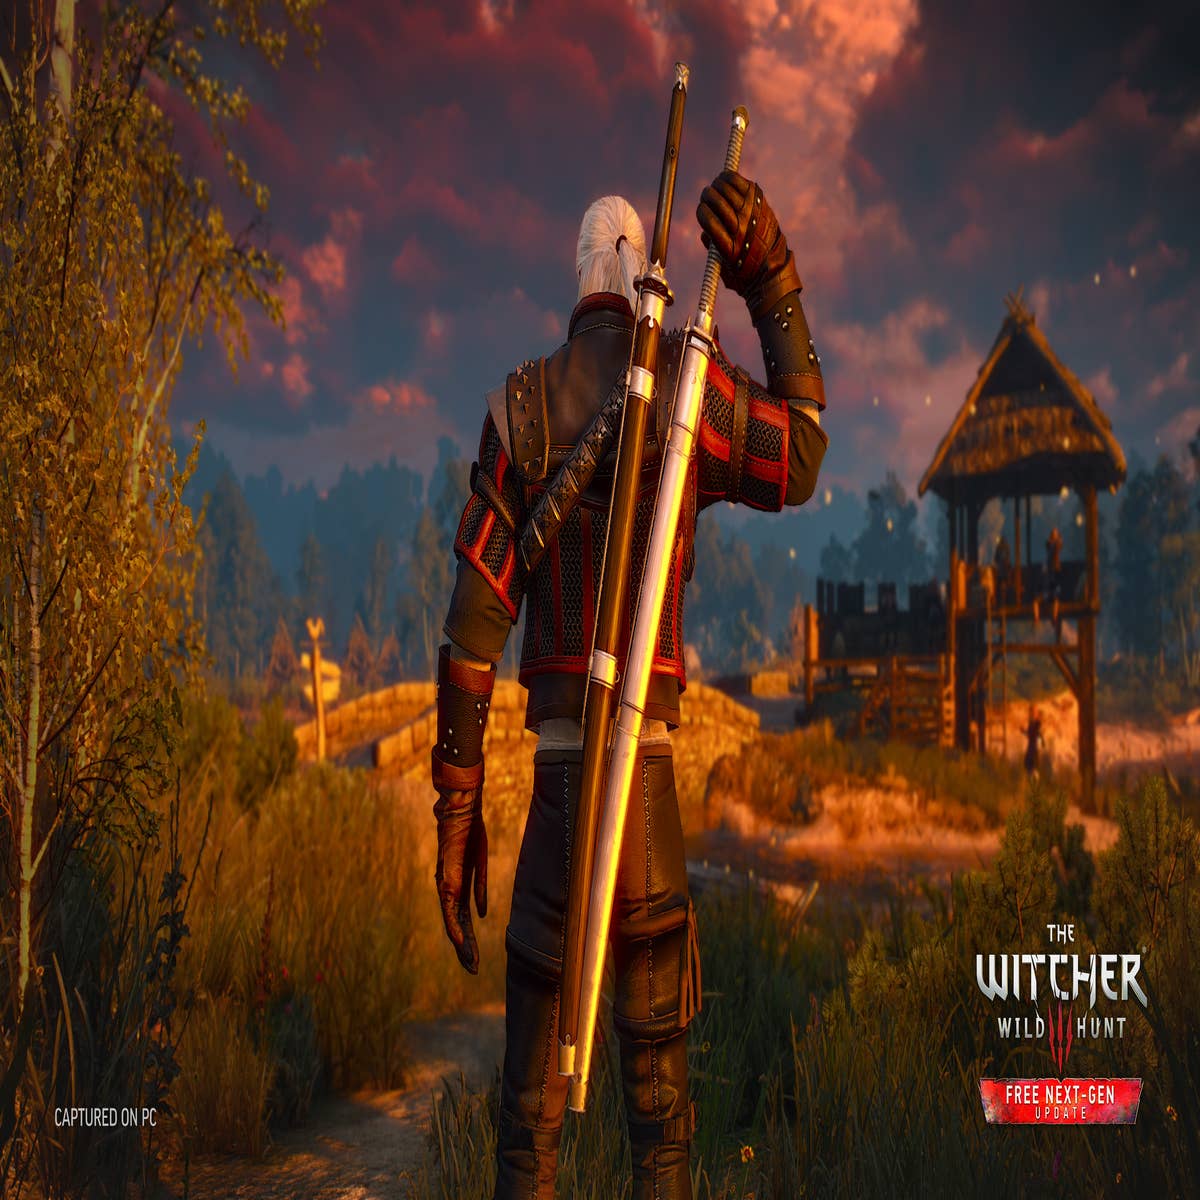 The Witcher 3: Wild Hunt Arrives on Next Gen this December - CD PROJEKT